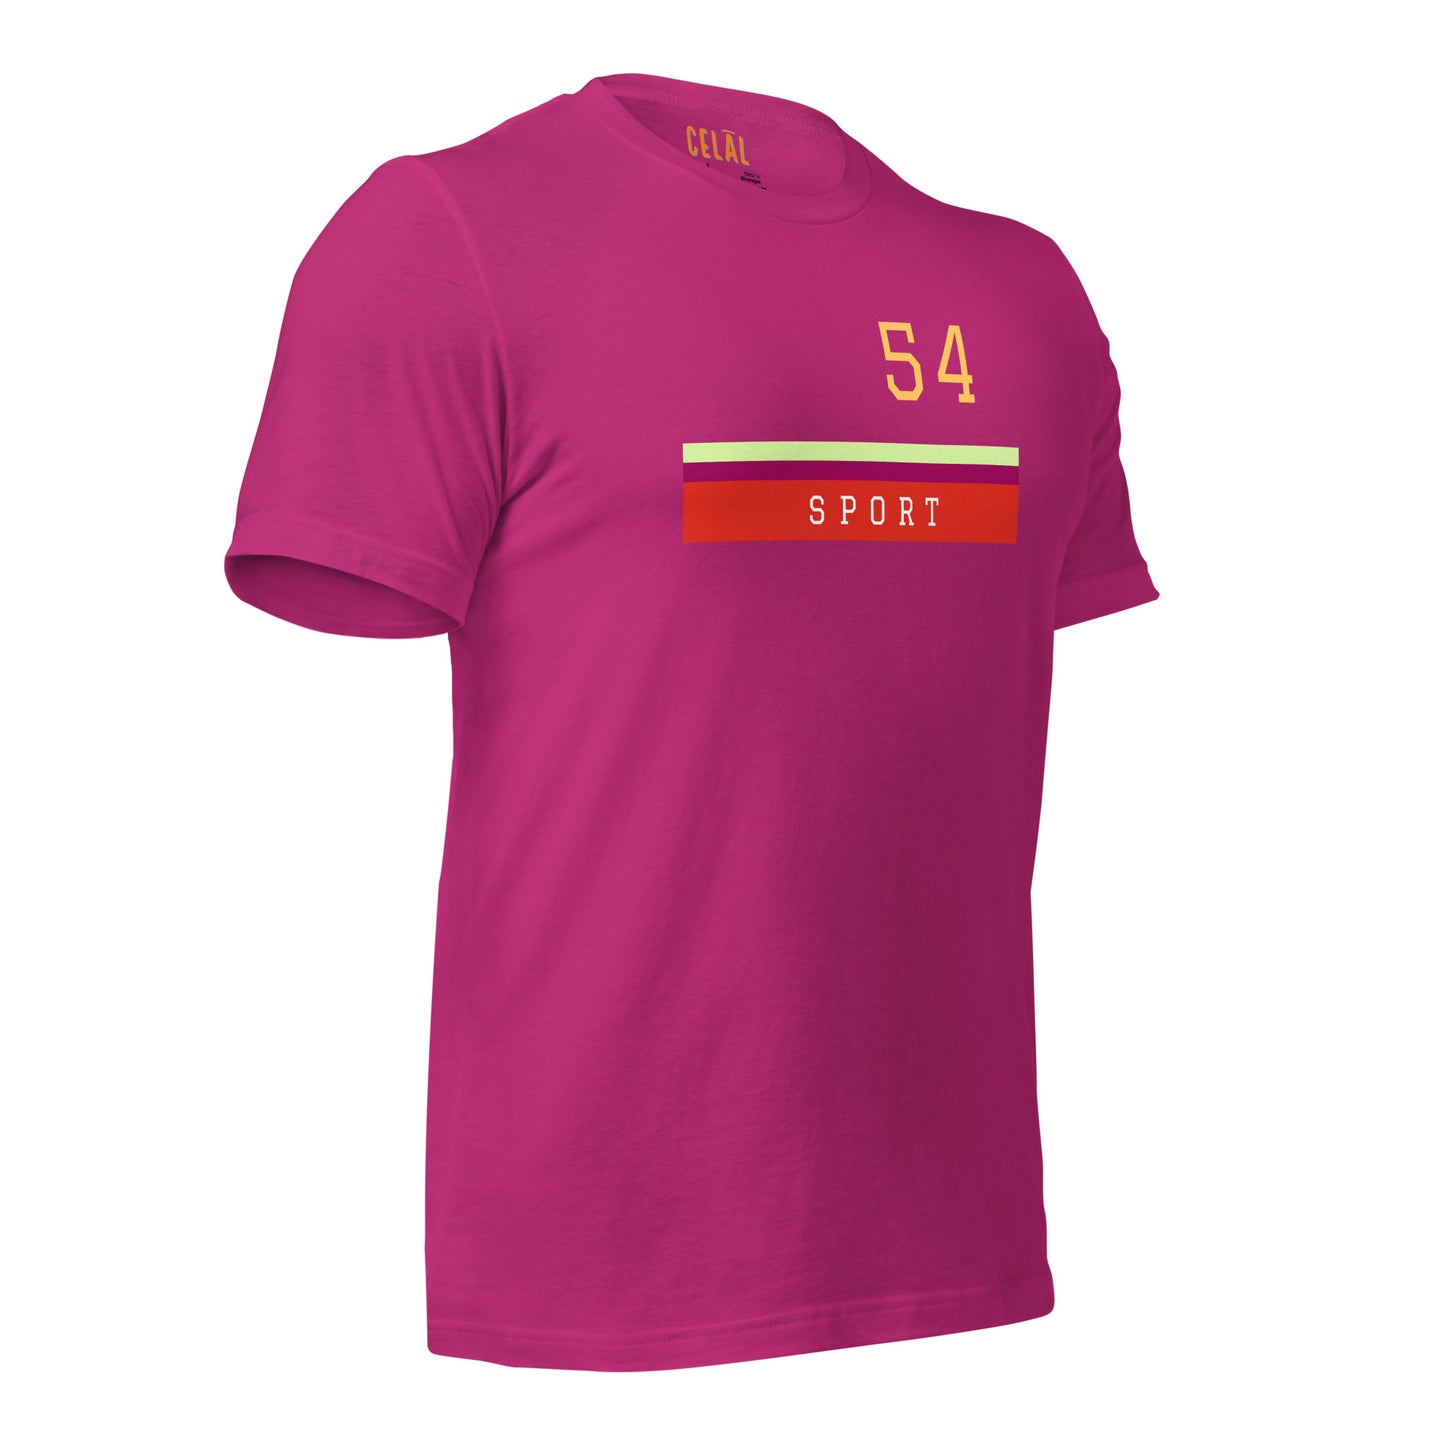 54 Unisex t-shirt